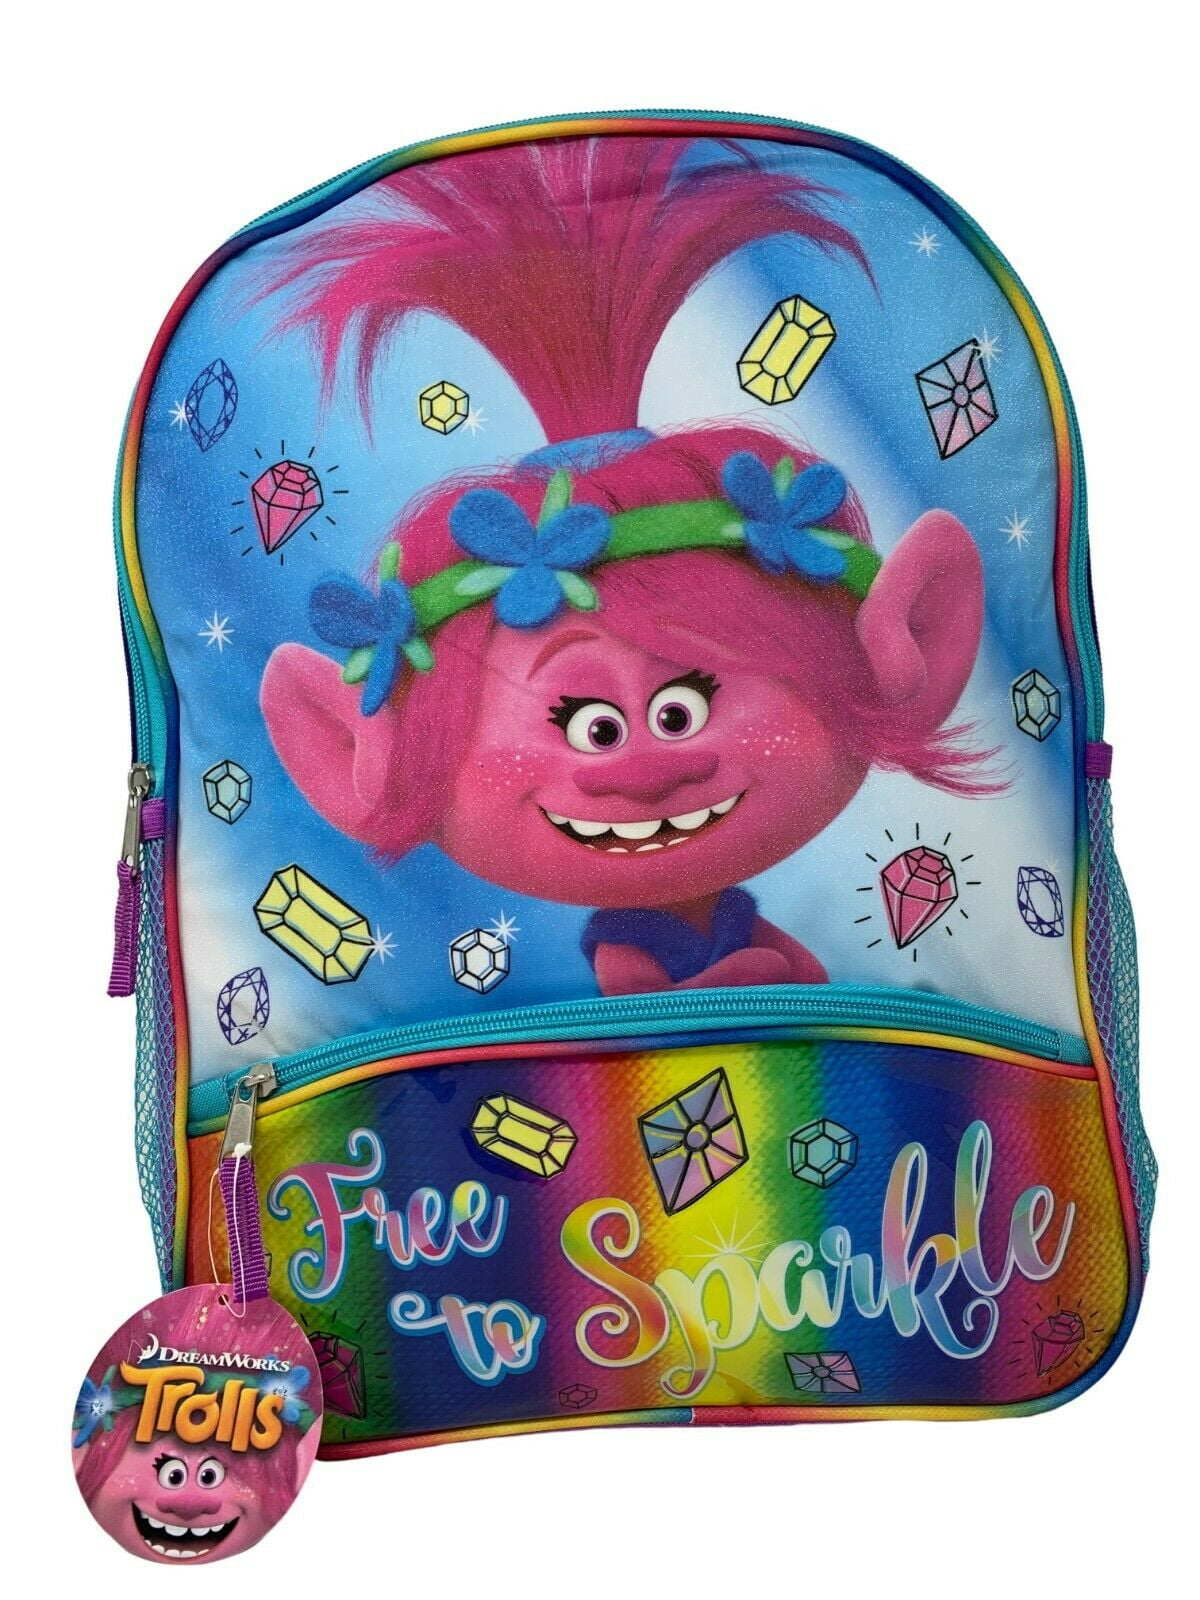 Cartoon Trolls Backpack For Teenagers Girls Anime Dipper Games TV Show  Animal Kindergarten Bags School Gift